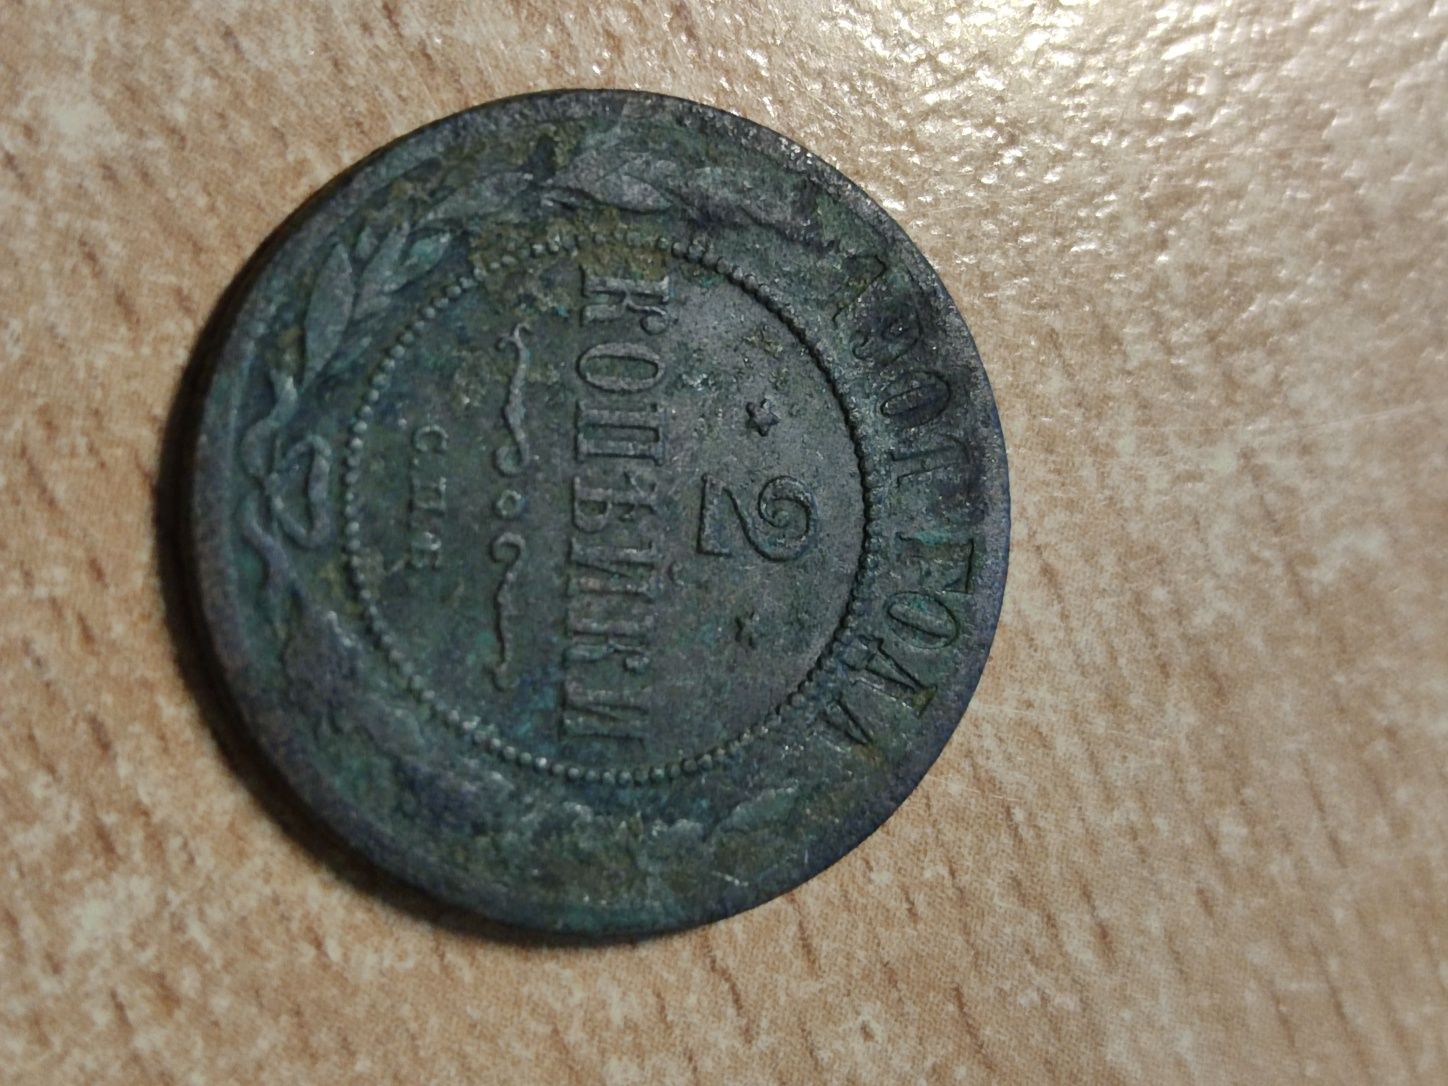 Moneta carska 2 kopiejki 1901